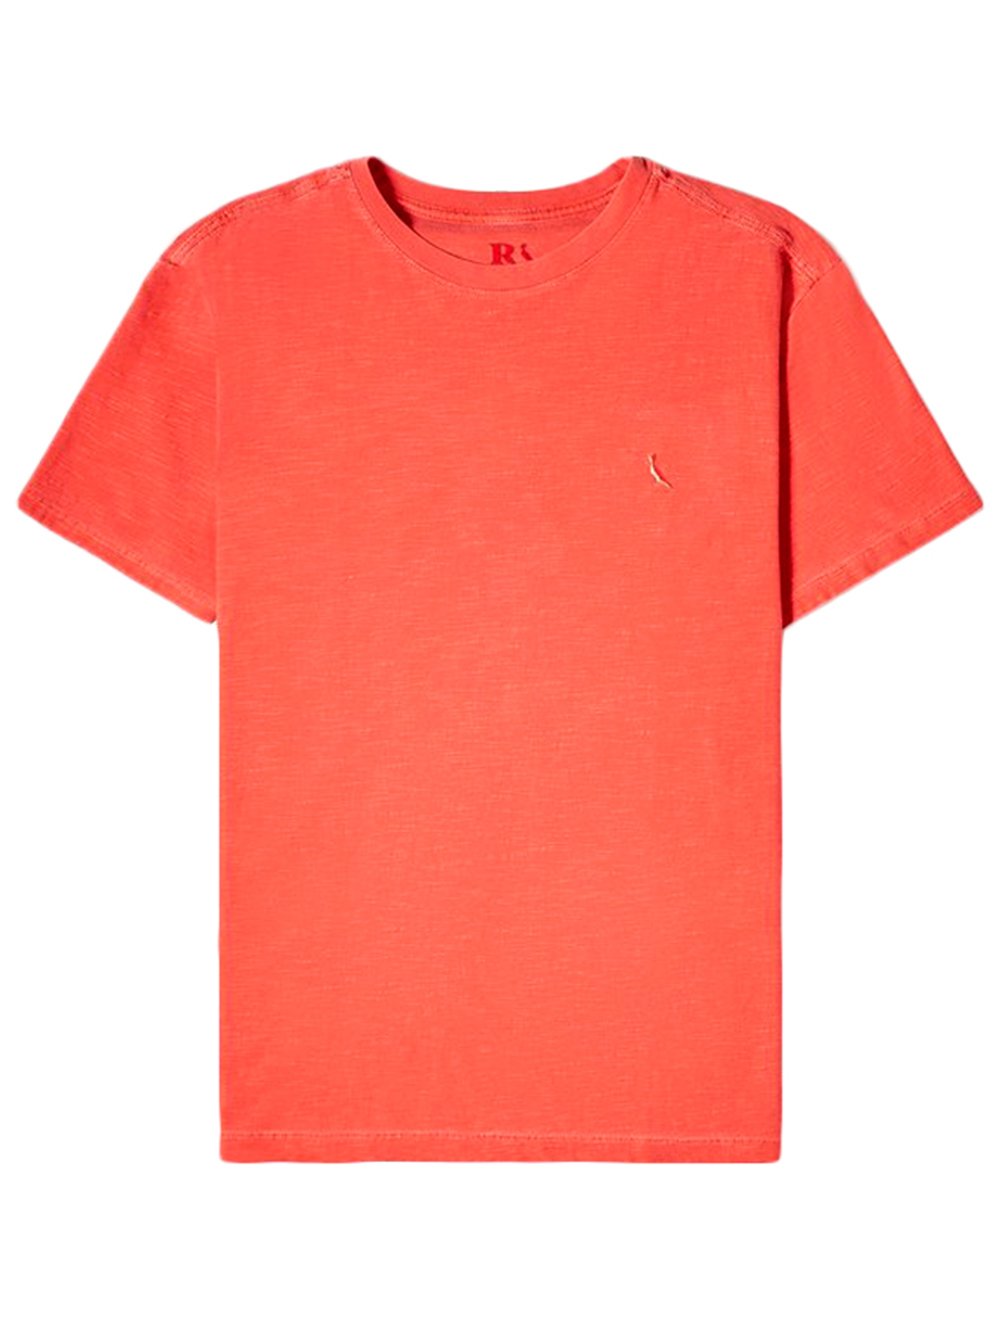 Camiseta Reserva Masculina Flamê Stone Vermelha Coral